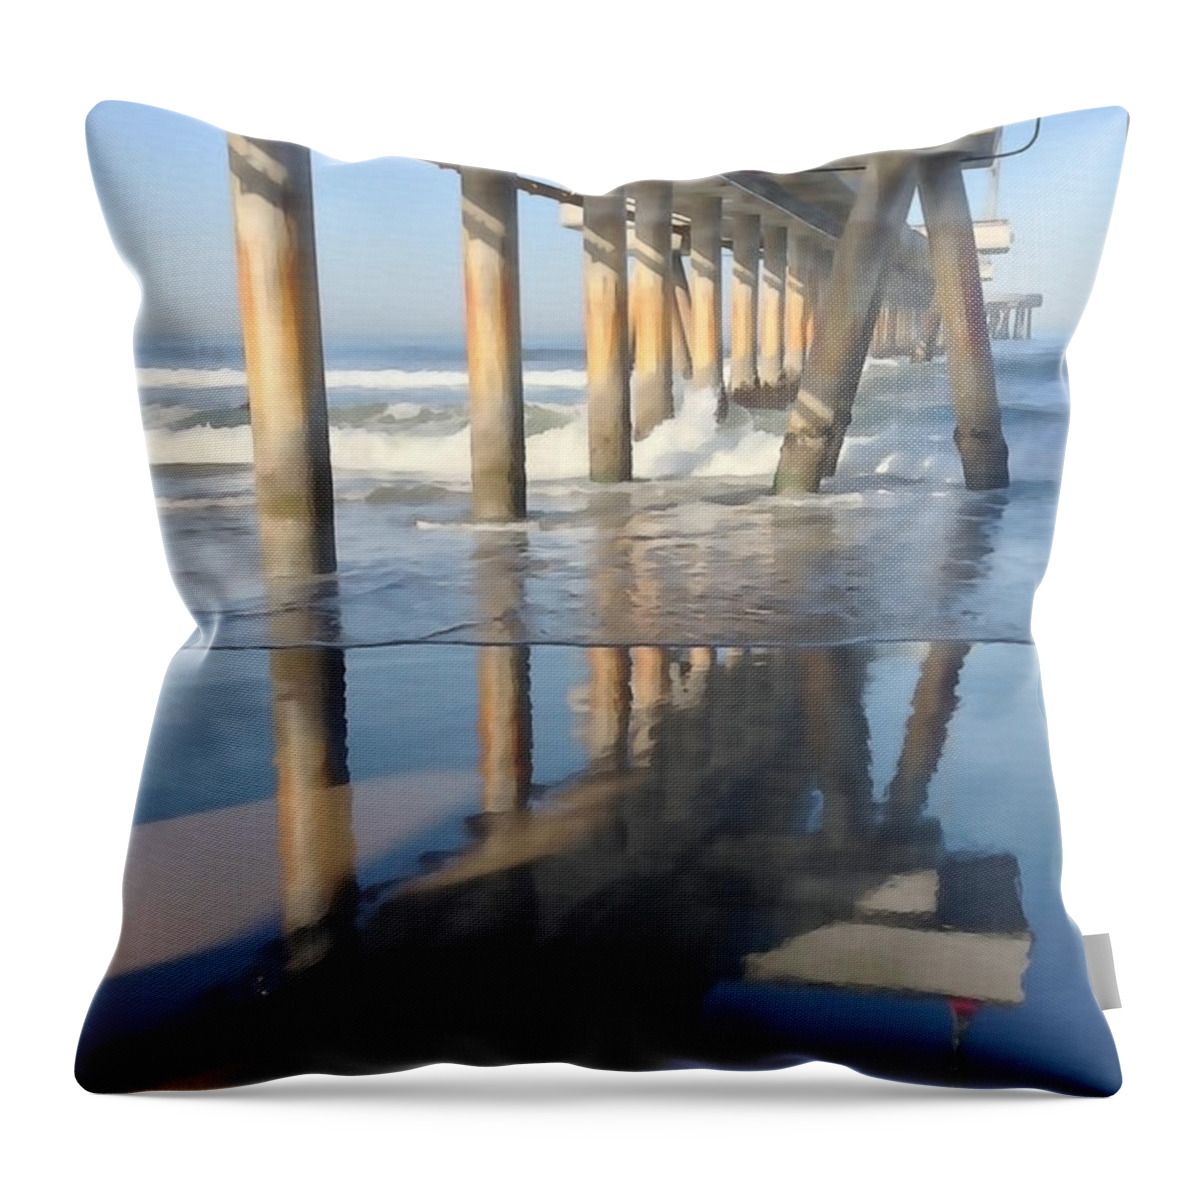 Venice Beach Pier Throw Pillow featuring the photograph Venice Beach Pier Reflection by Art Block Collections